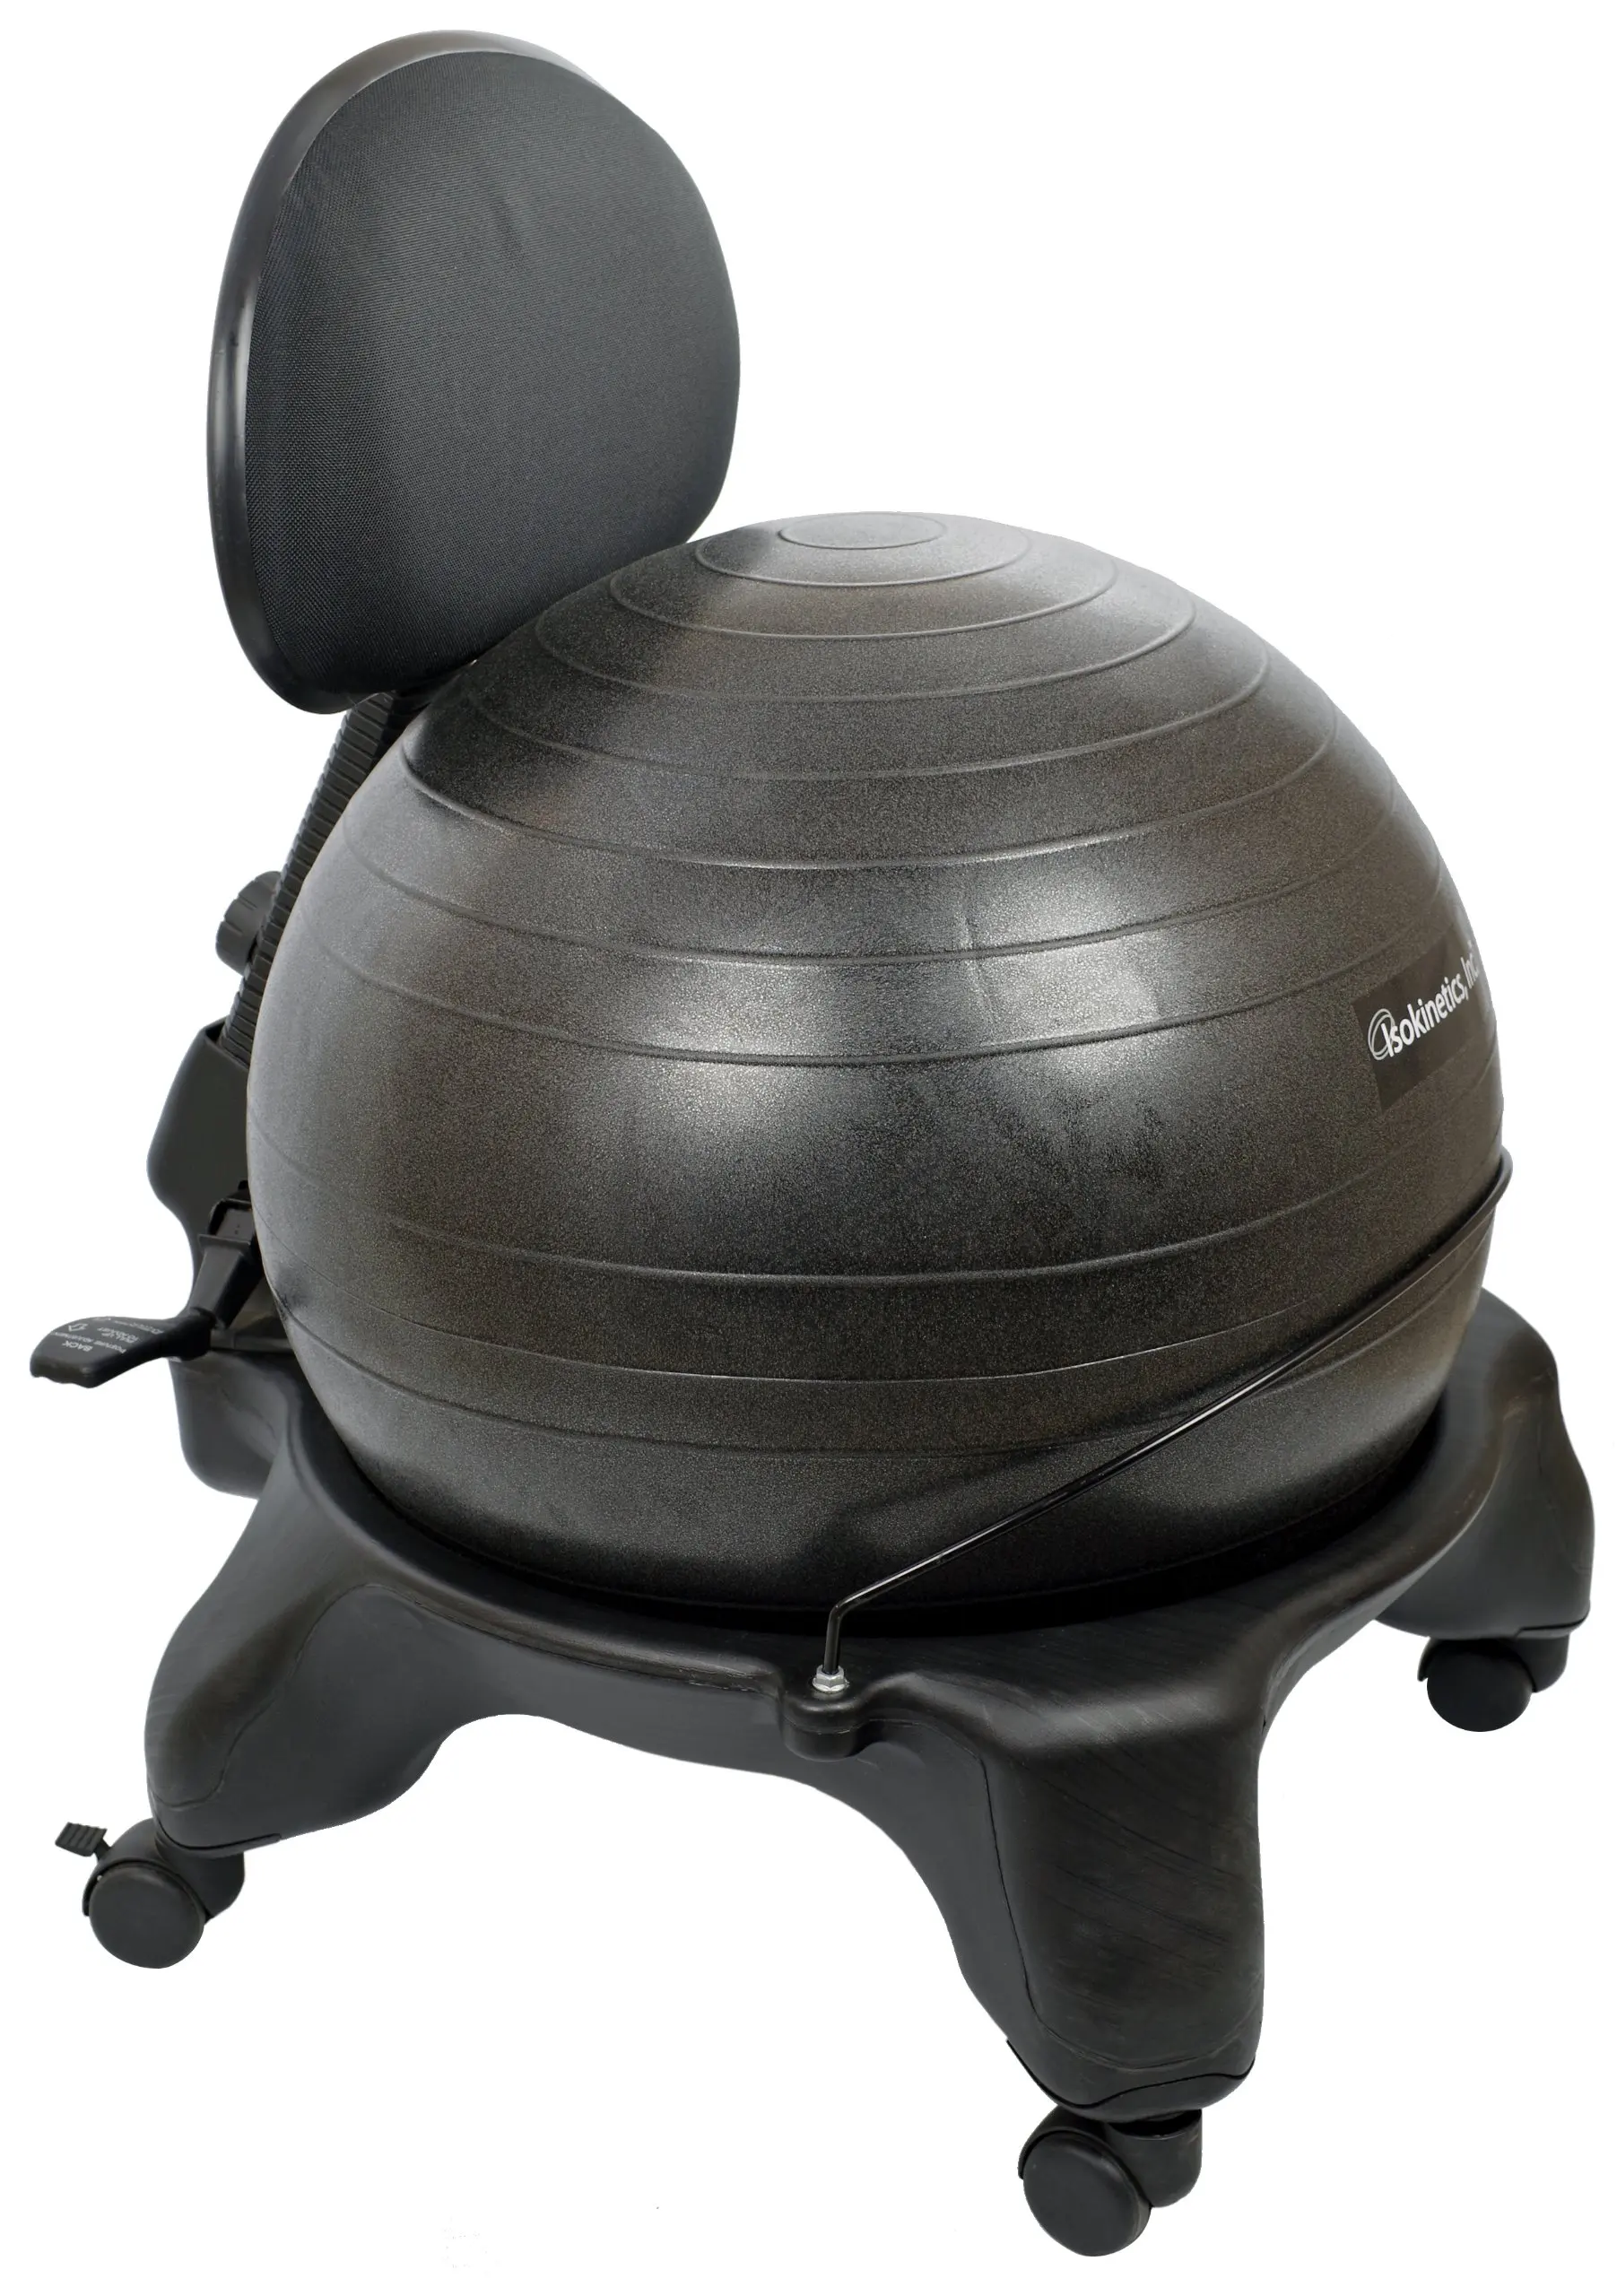 exercise ball desk chair